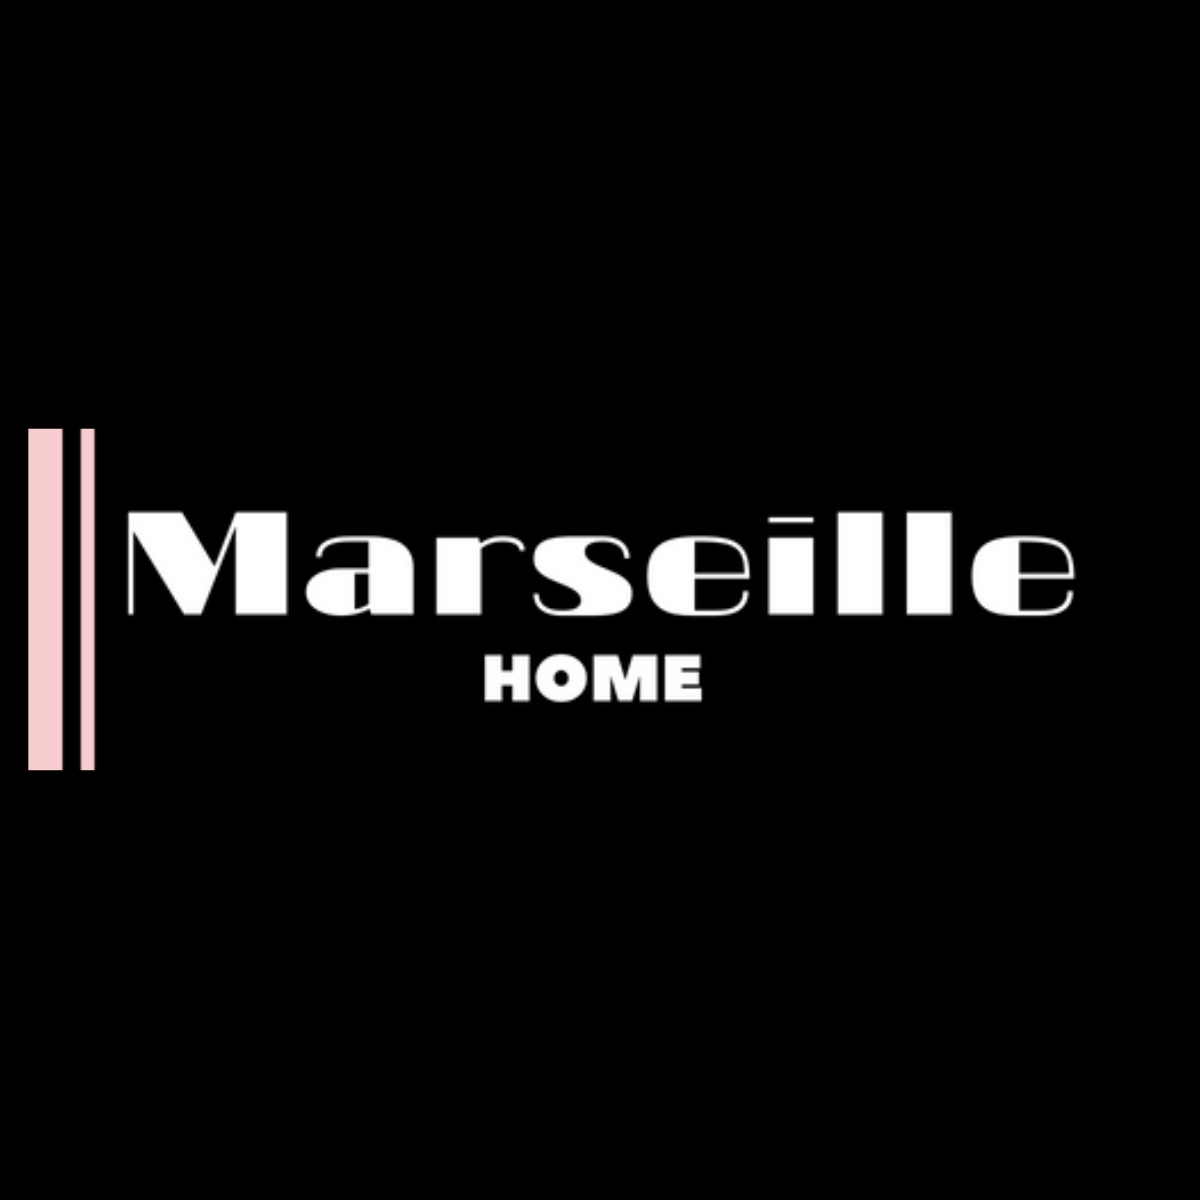 Marseille home